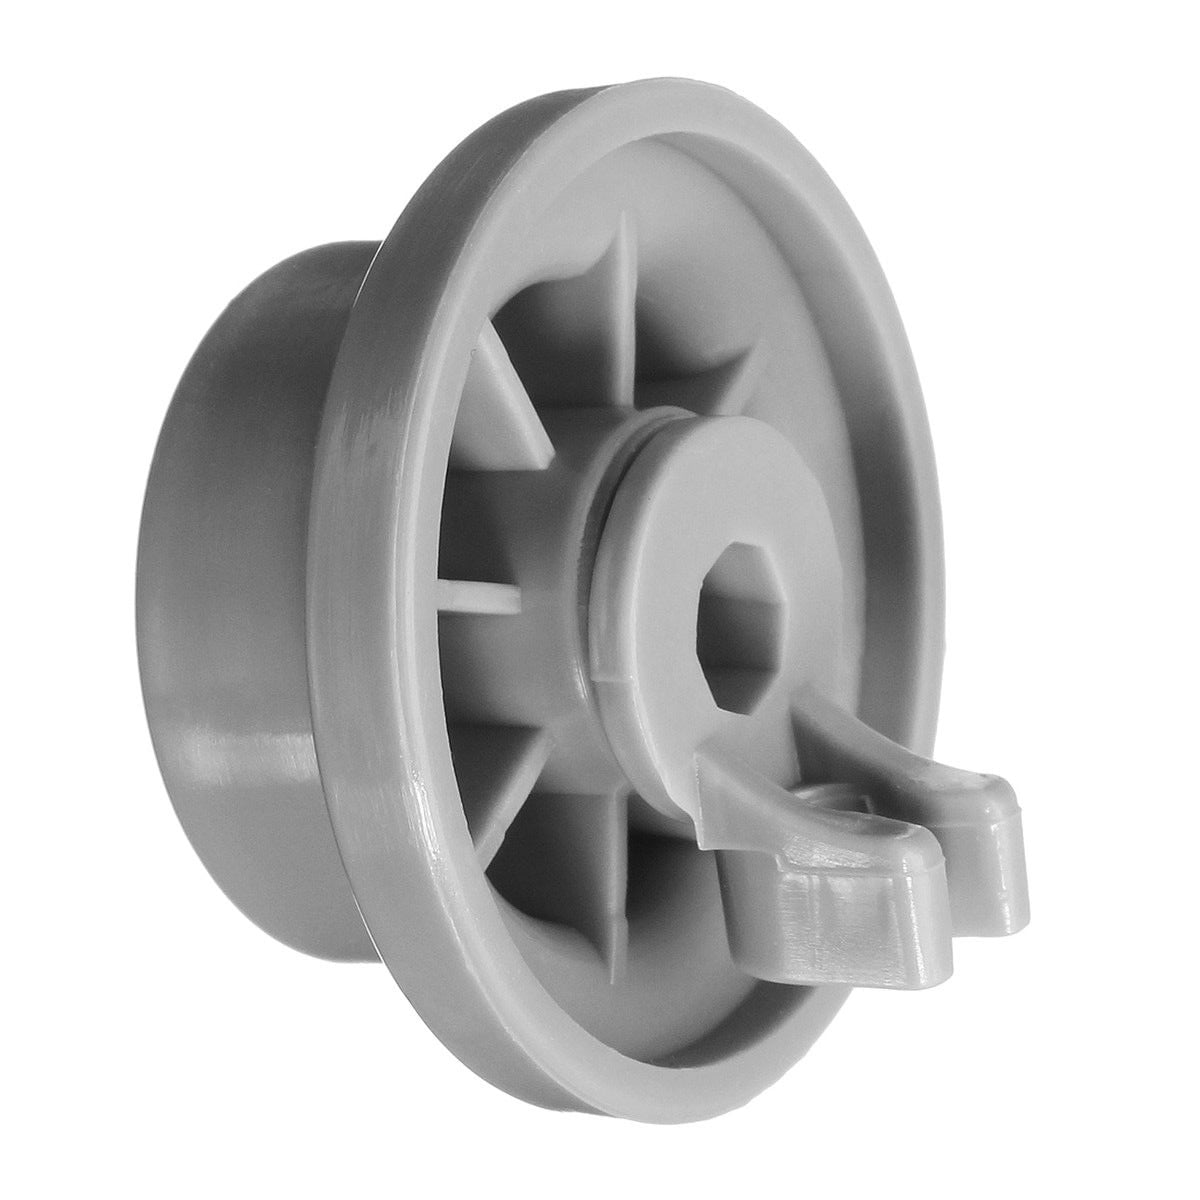 for Bosch Neff & Siemens Dishwasher Lower Rail Basket Wheels x 4 Grey Rollers 